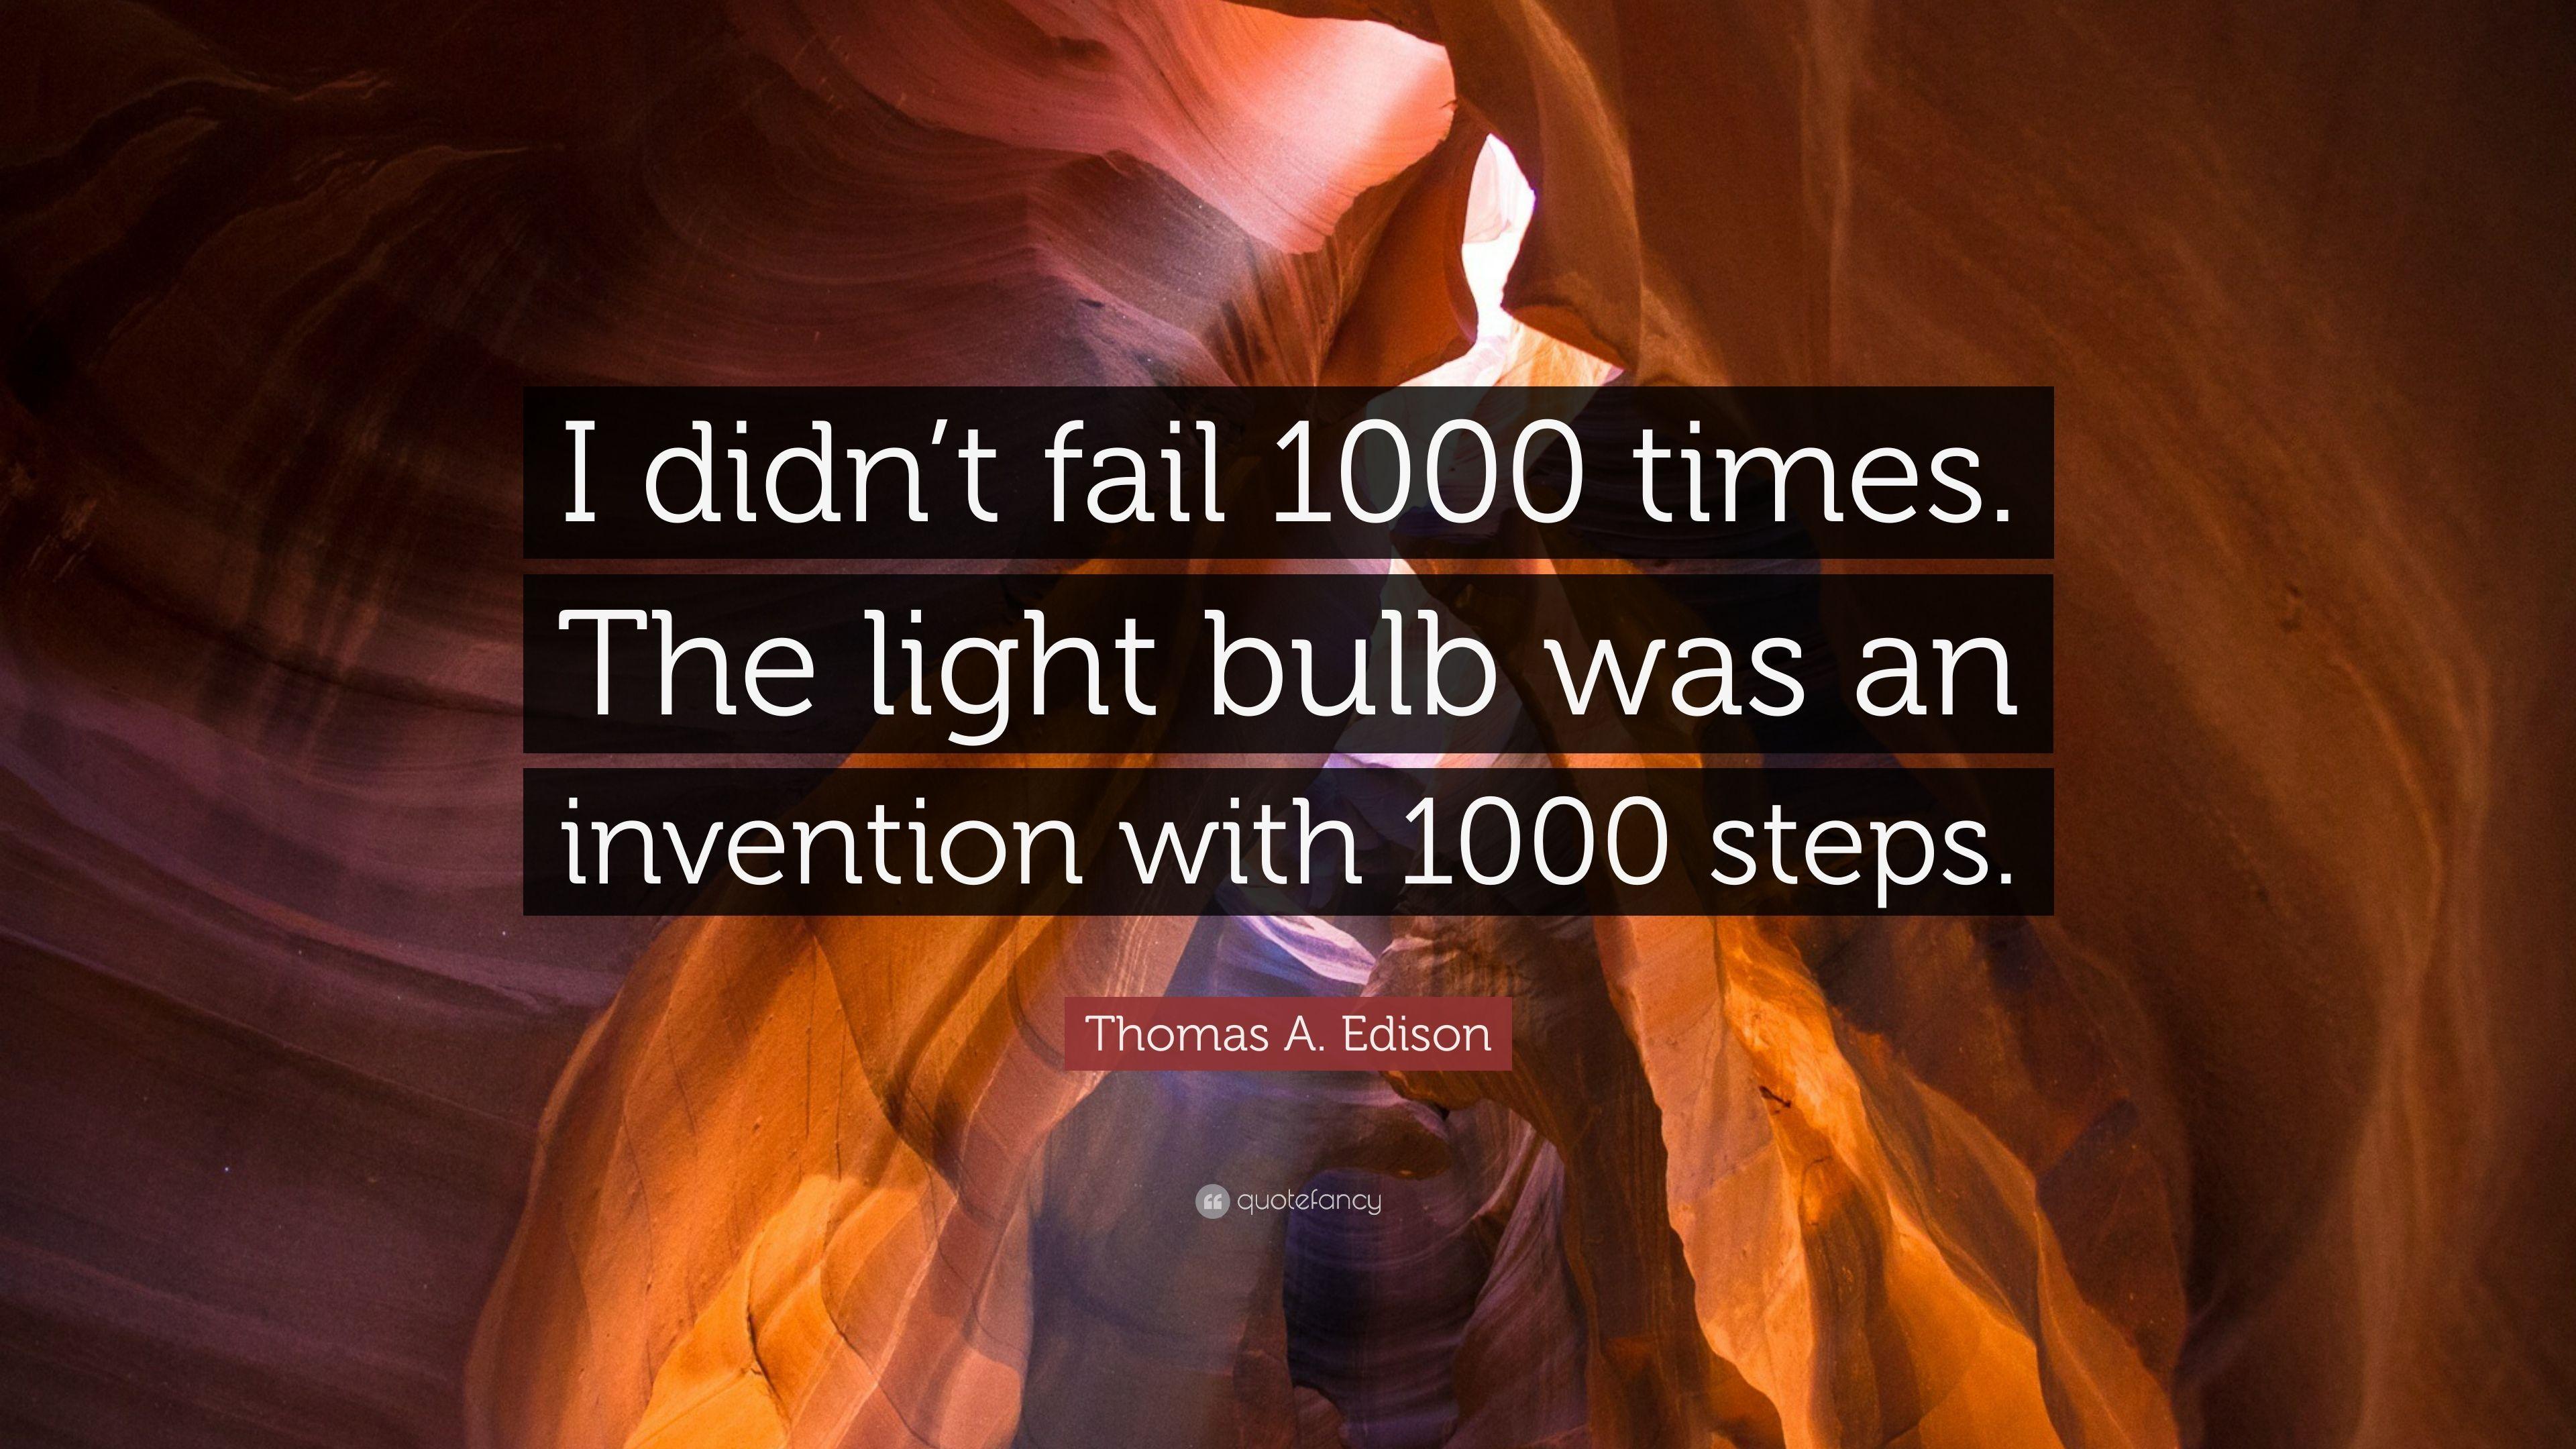 Thomas A. Edison Quote: “I didn't fail 1000 times. The light bulb